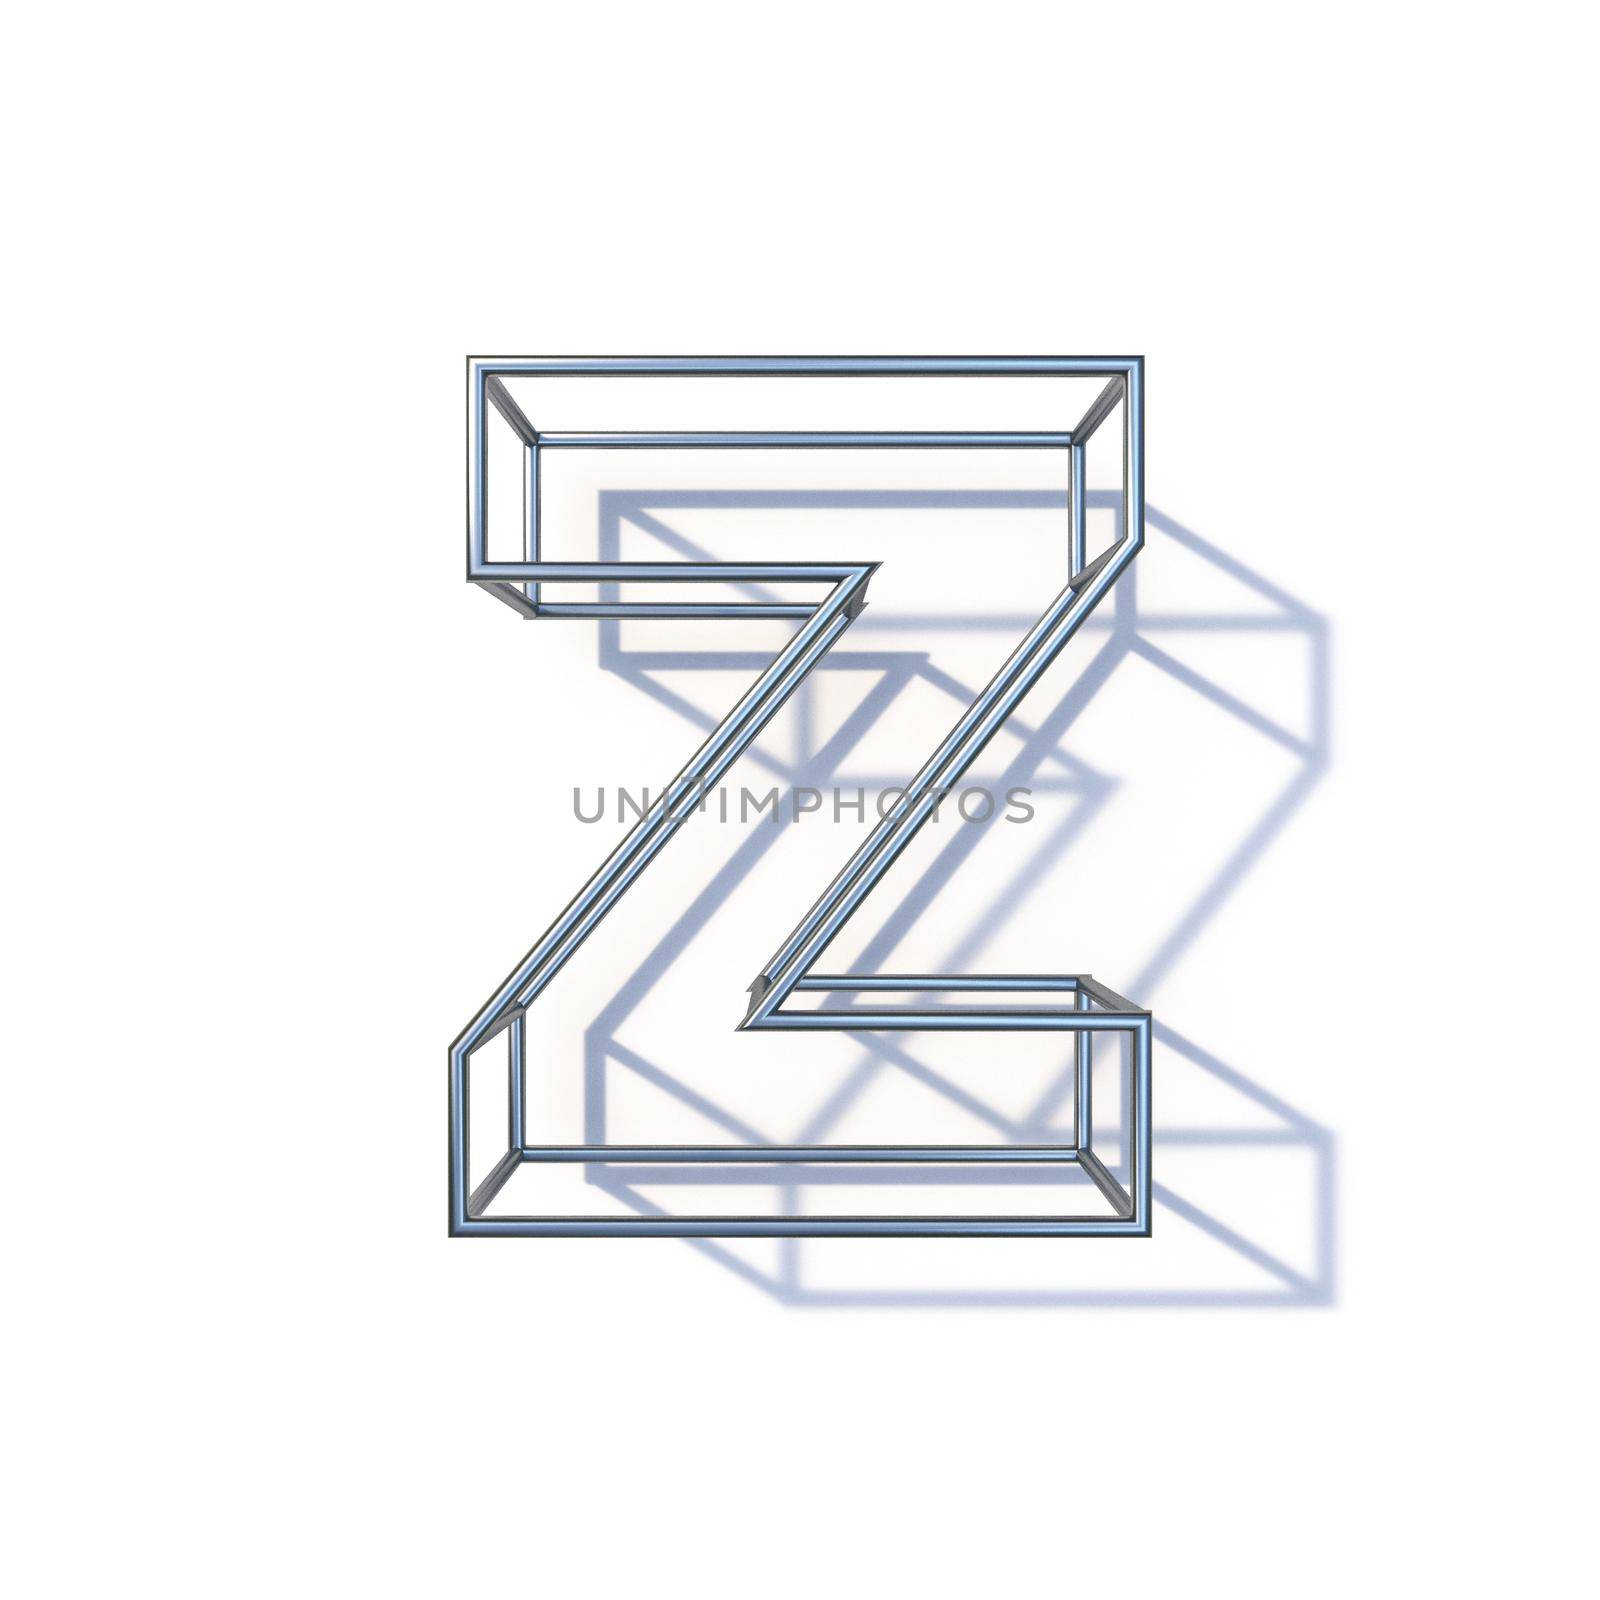 Steel wire frame font Letter Z 3D render illustration isolated on white background